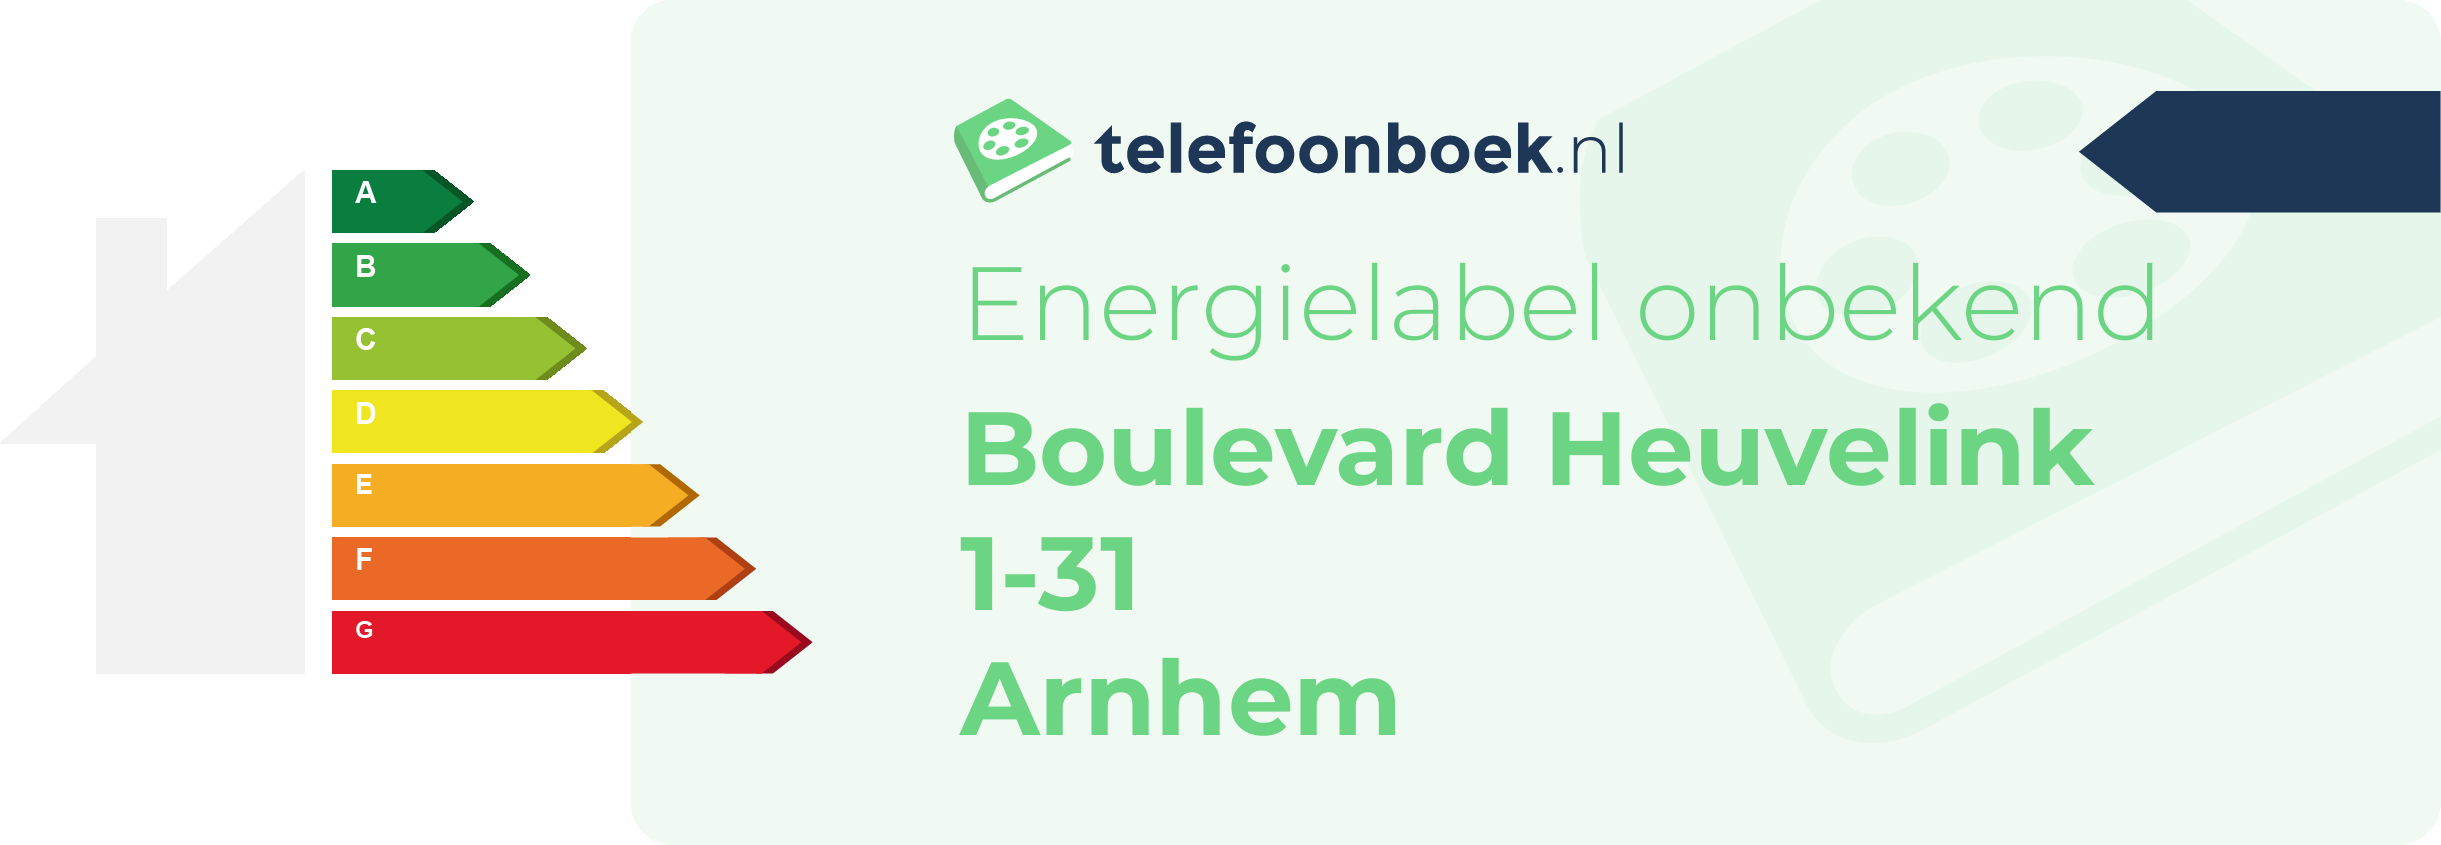 Energielabel Boulevard Heuvelink 1-31 Arnhem